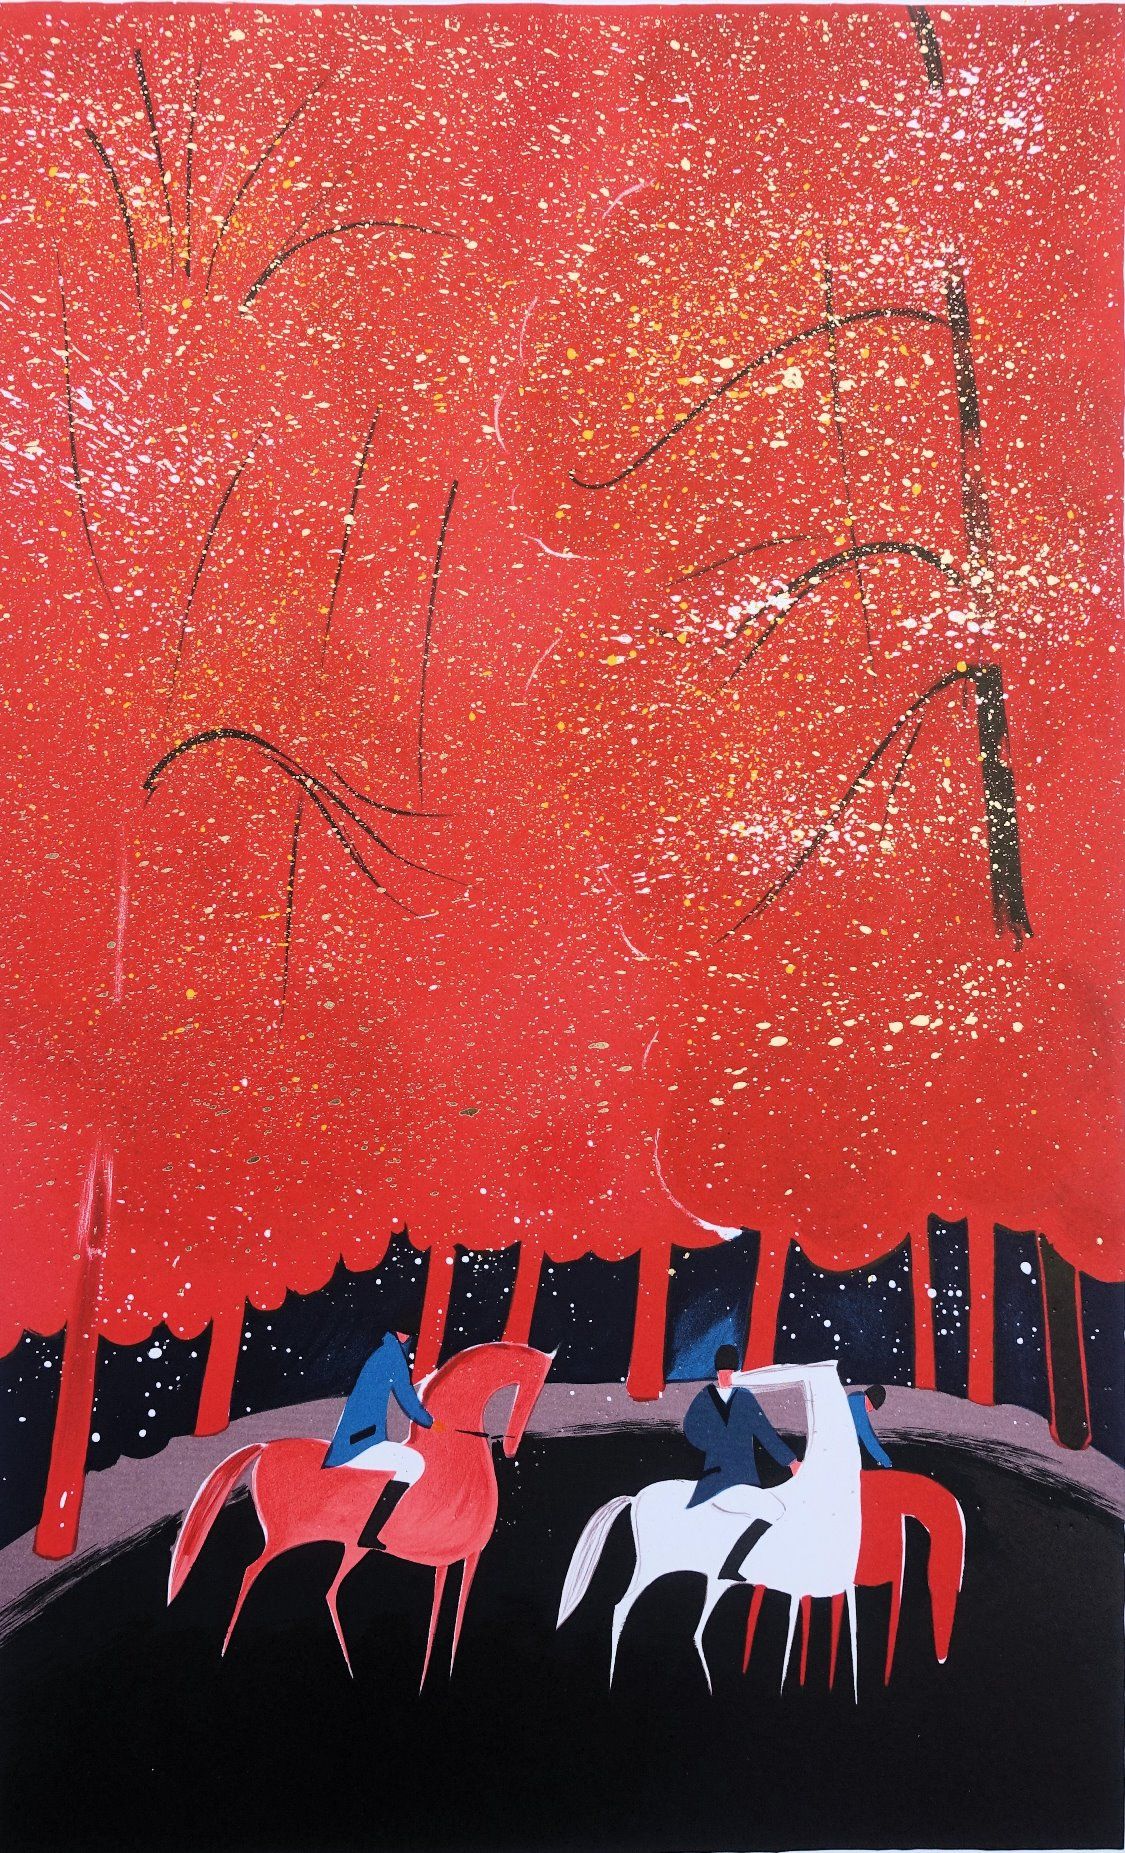 Serge Lassus 塞尔吉-拉苏斯(1933-)

骑士和红色森林

原始石版画

牛皮纸上

第984版

用铅笔签名

编号为250份的版本

尺寸5&hellip;